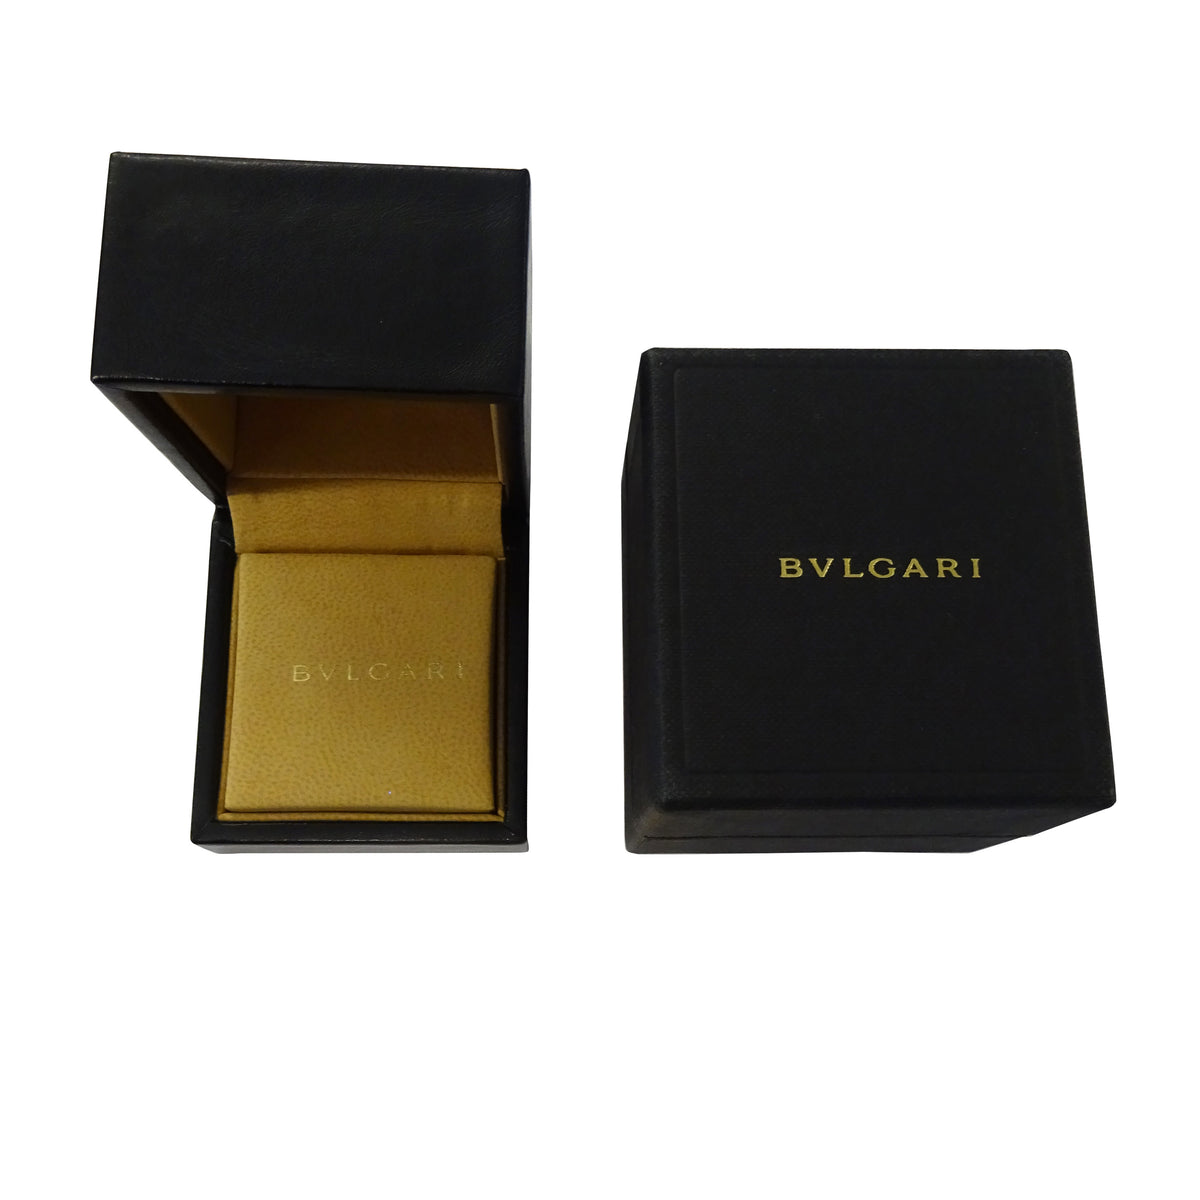 Bulgari Spiga Curved Diamond Hoop Earrings in 18KT Yellow Gold  0.75 CTW